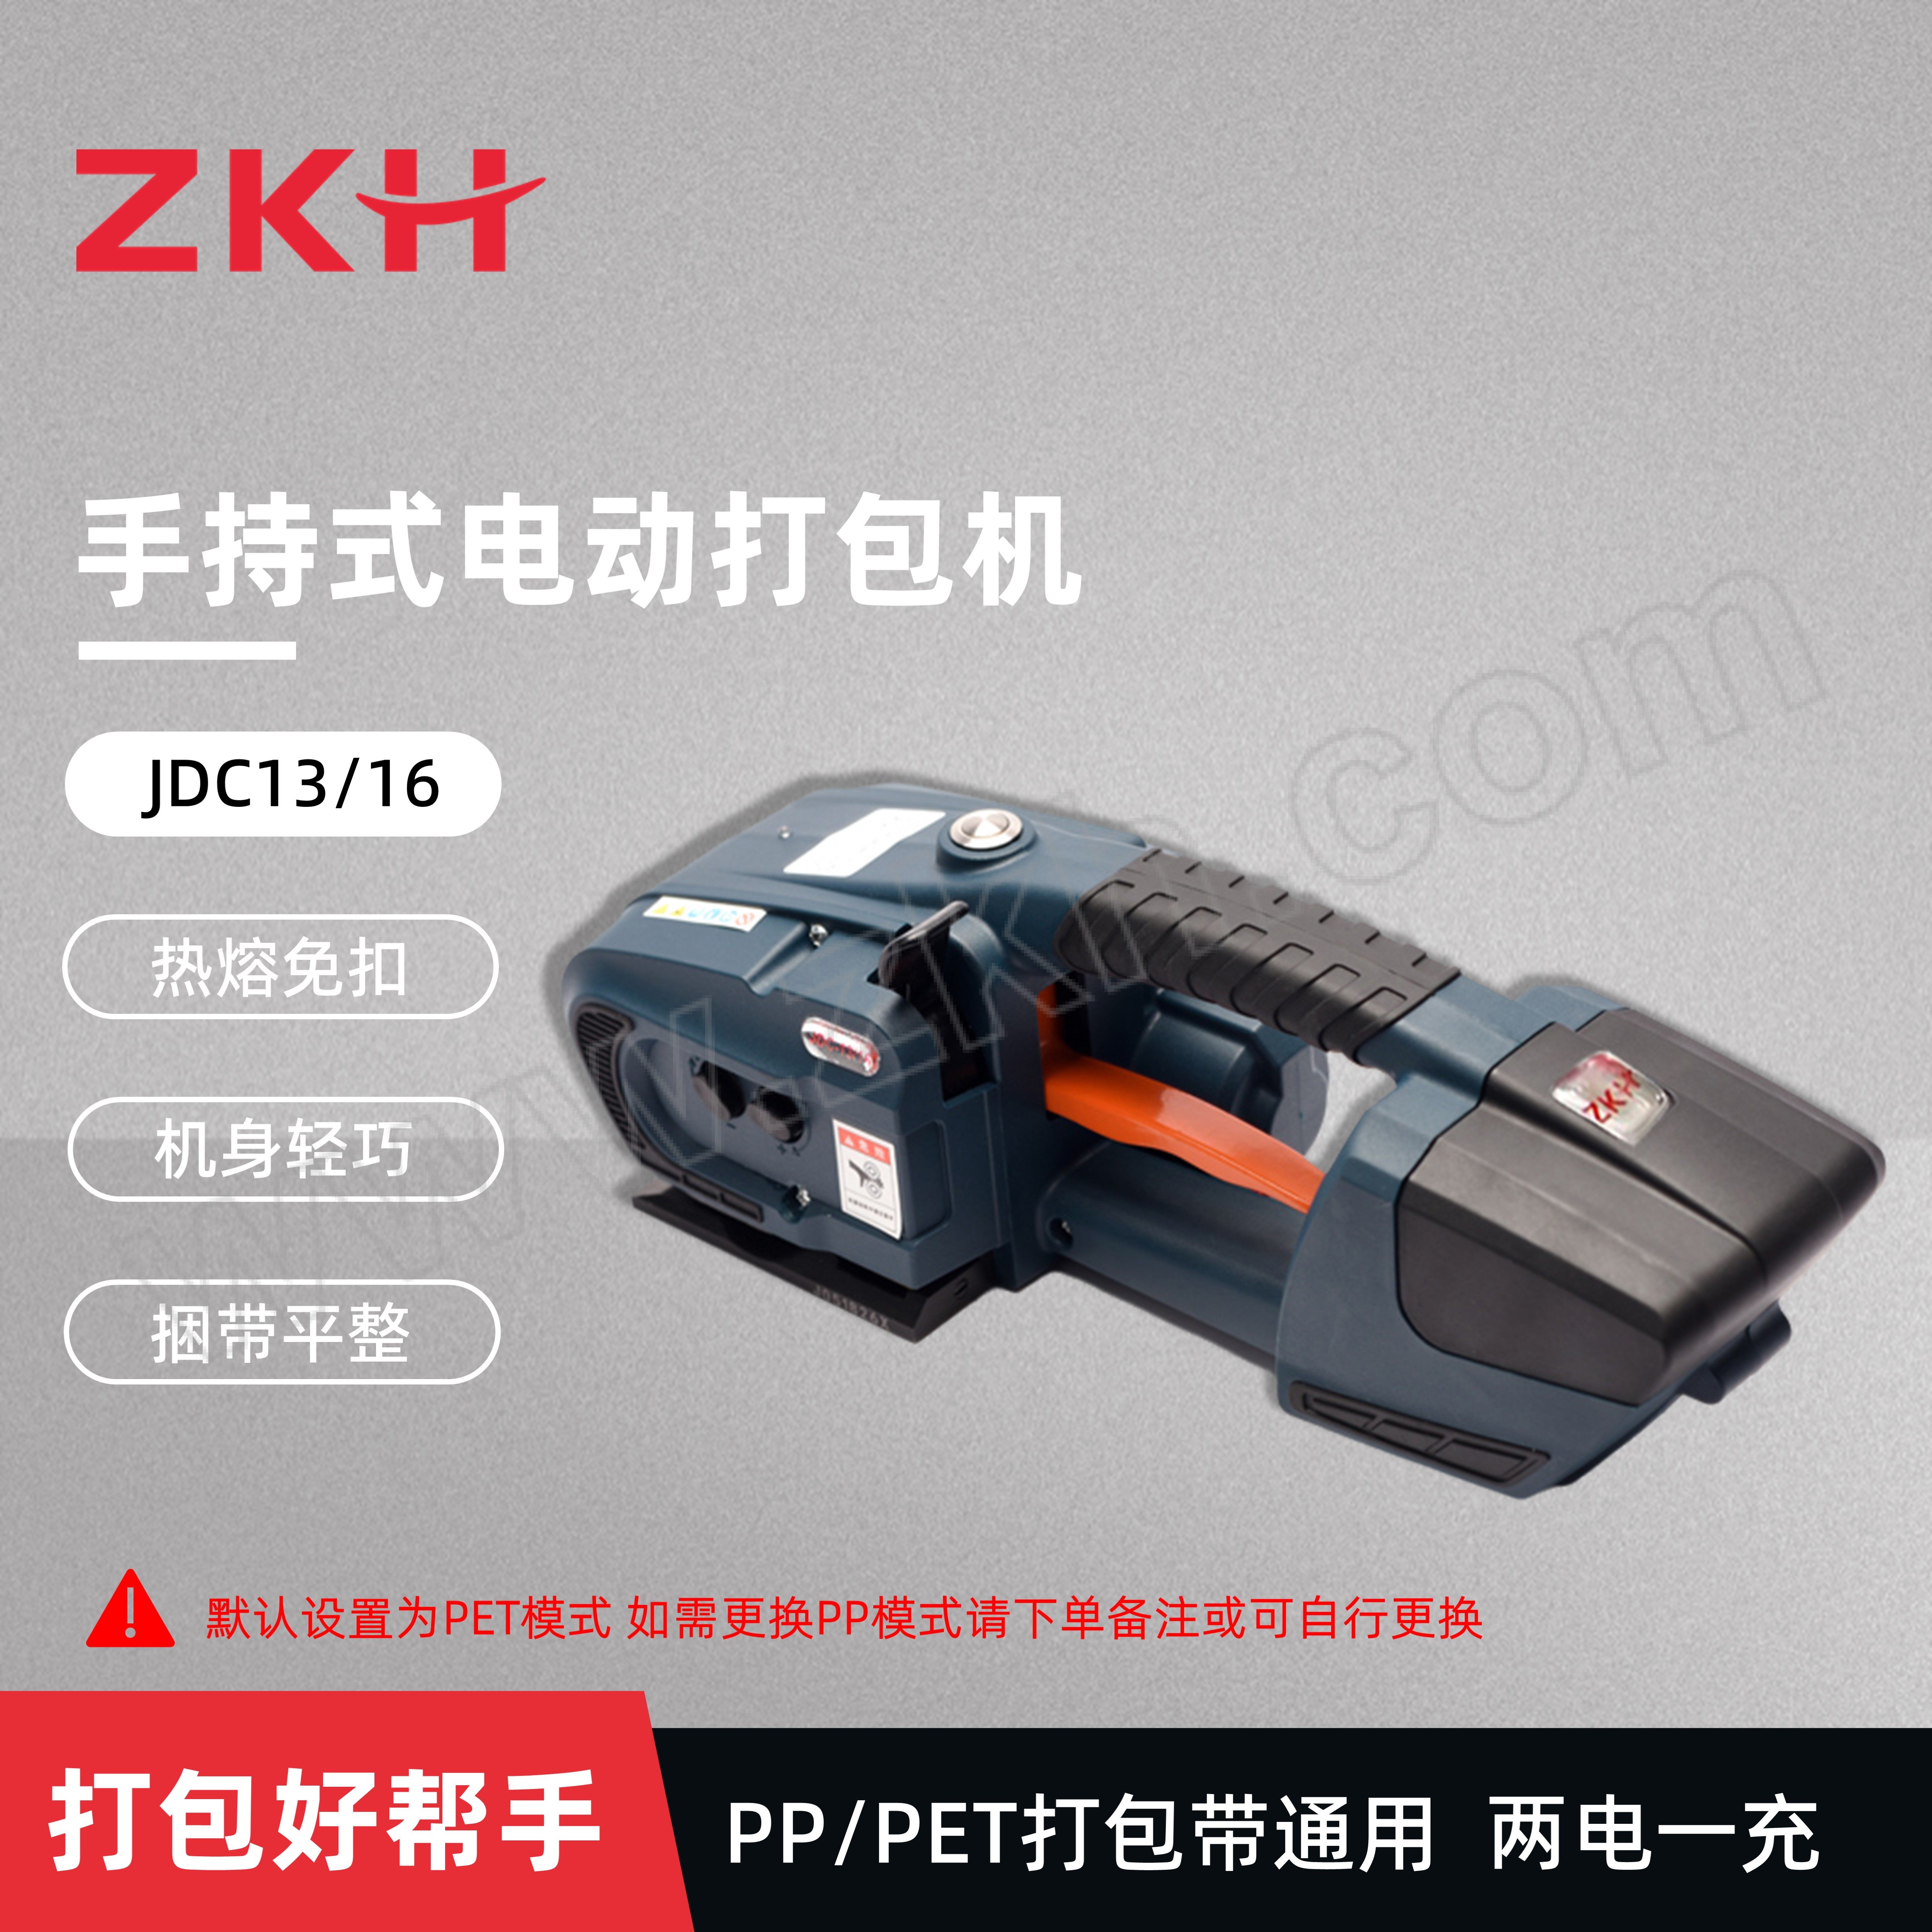 ZKH/震坤行 电动打包机 JDC13/16 双电池 适用带宽13~16mm 厚0.4~1.2mm 默认设置为PET模式 如需更换PP模式请下单备注或可自行更换 1台